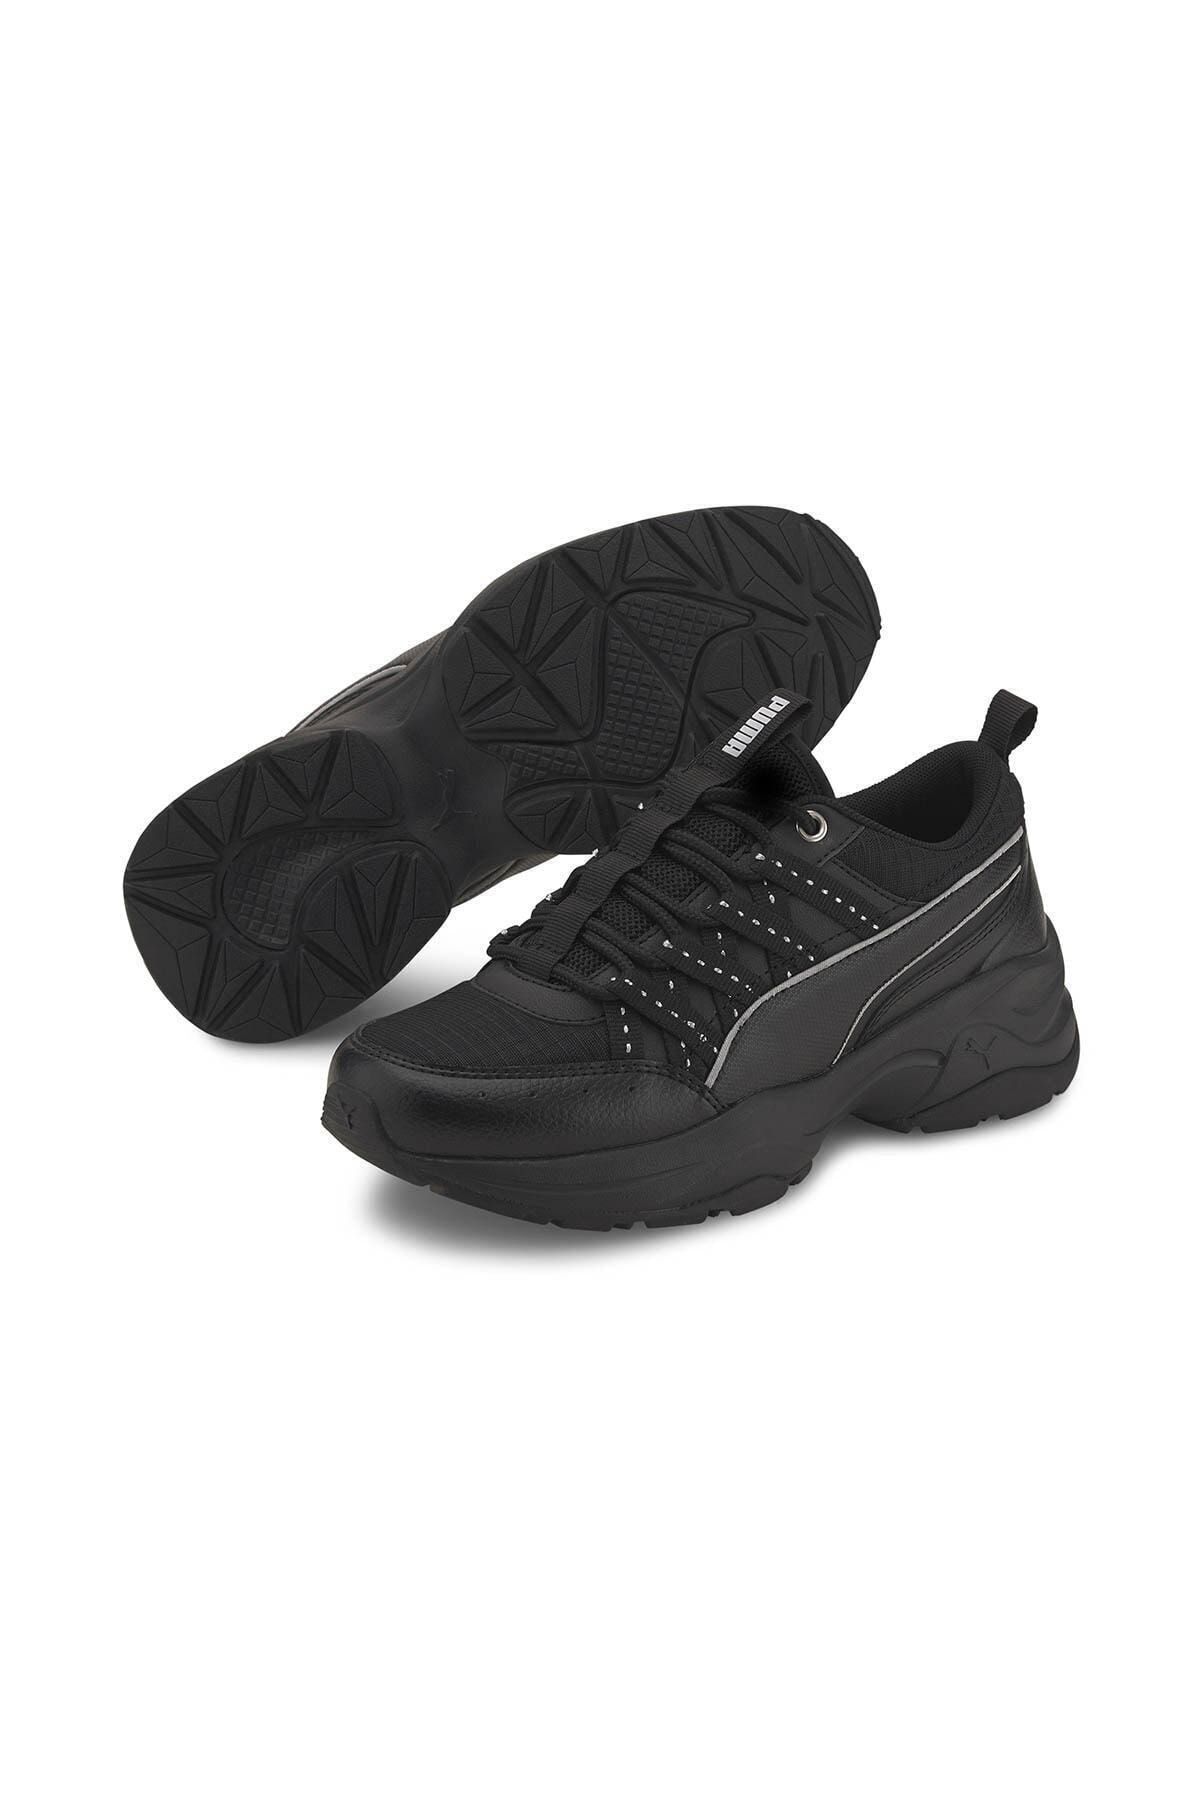 Puma CILIA TR Siyah Kadın Sneaker Ayakkabı 100659530